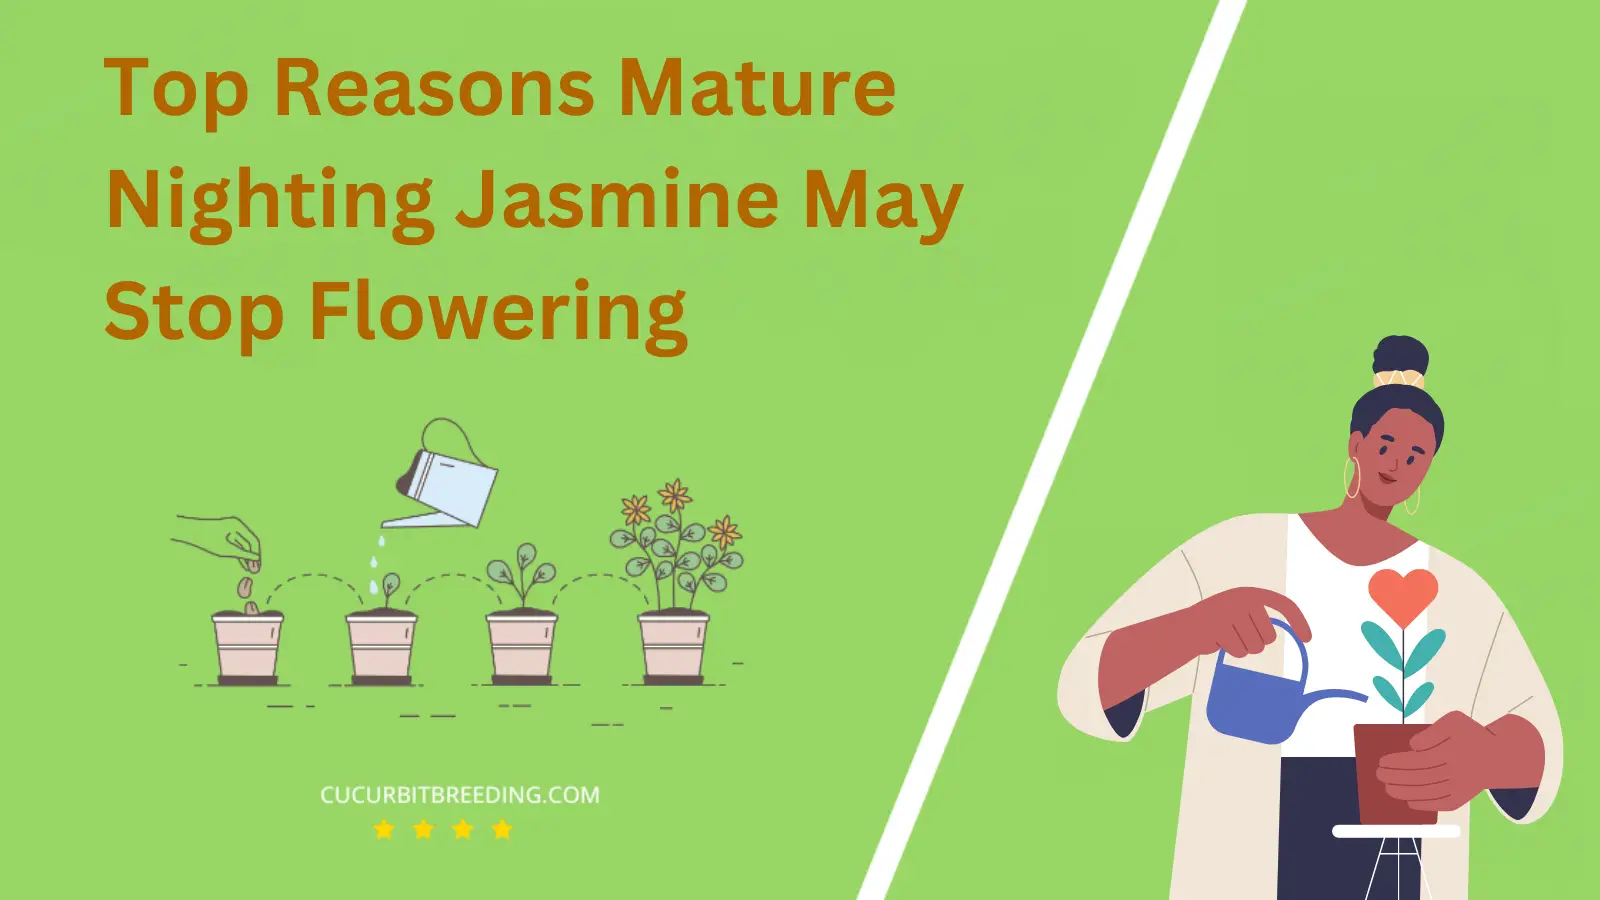 Top Reasons Mature Nighting Jasmine May Stop Flowering